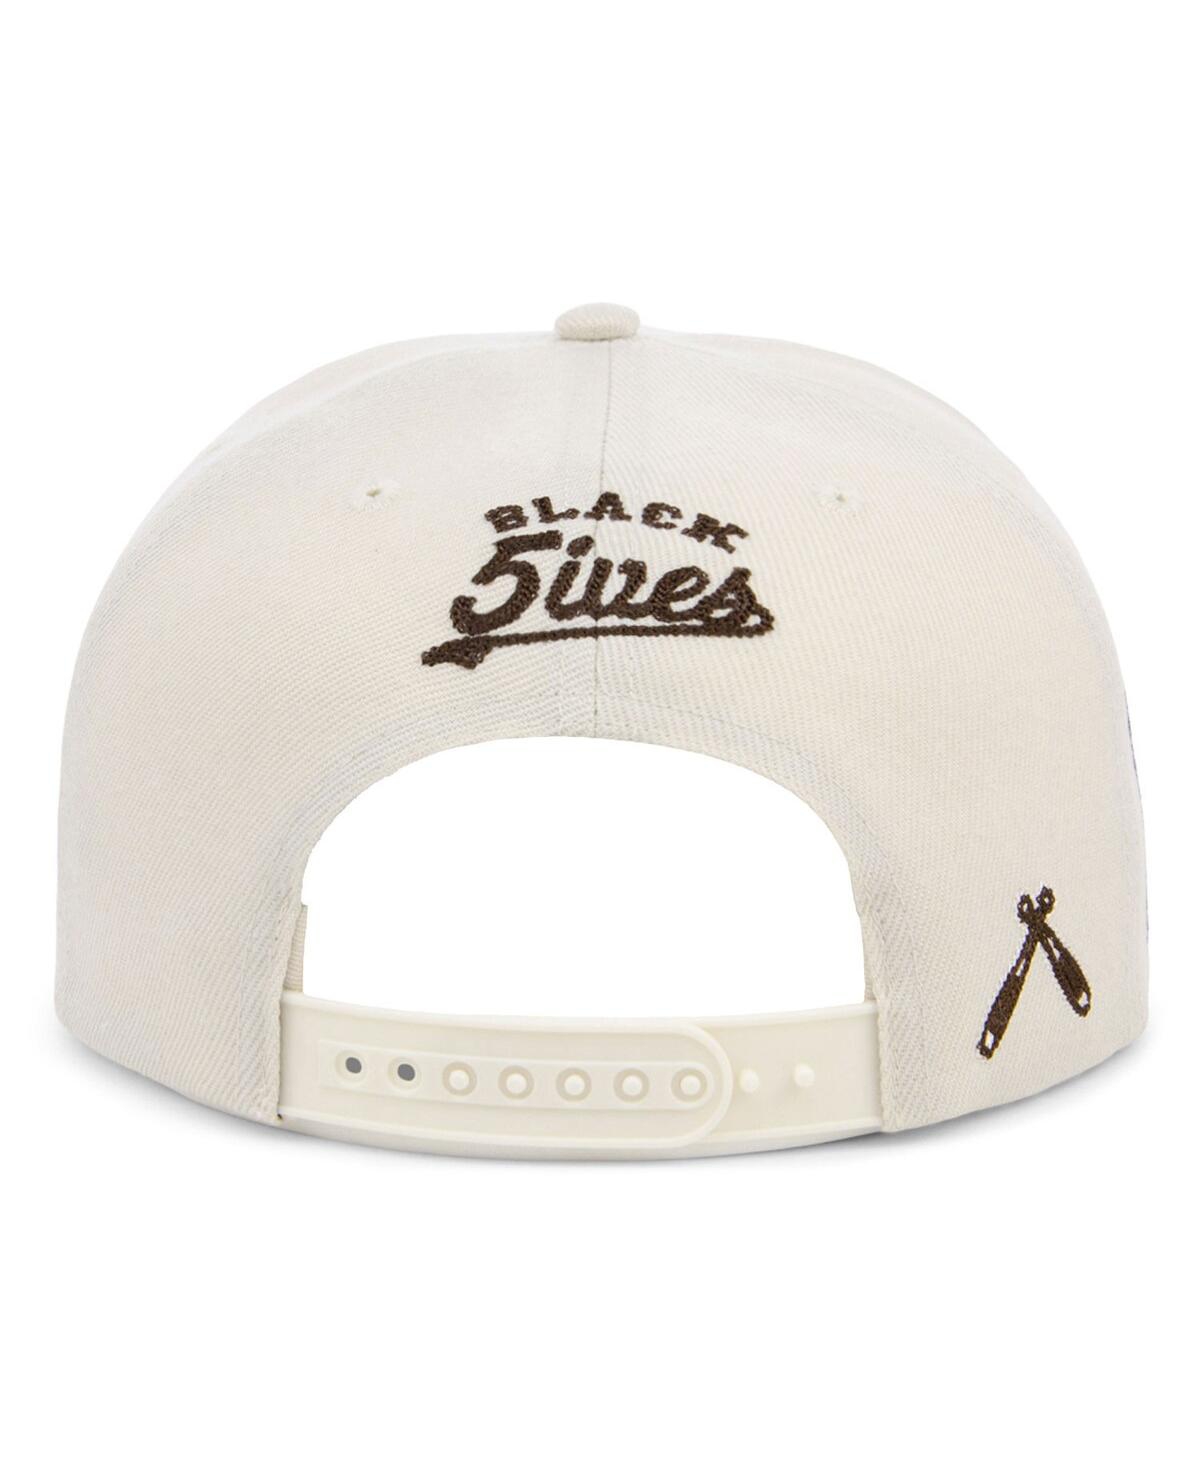 Shop Physical Culture Men's  Cream Monticello Athletic Association Black Fives Snapback Adjustable Hat